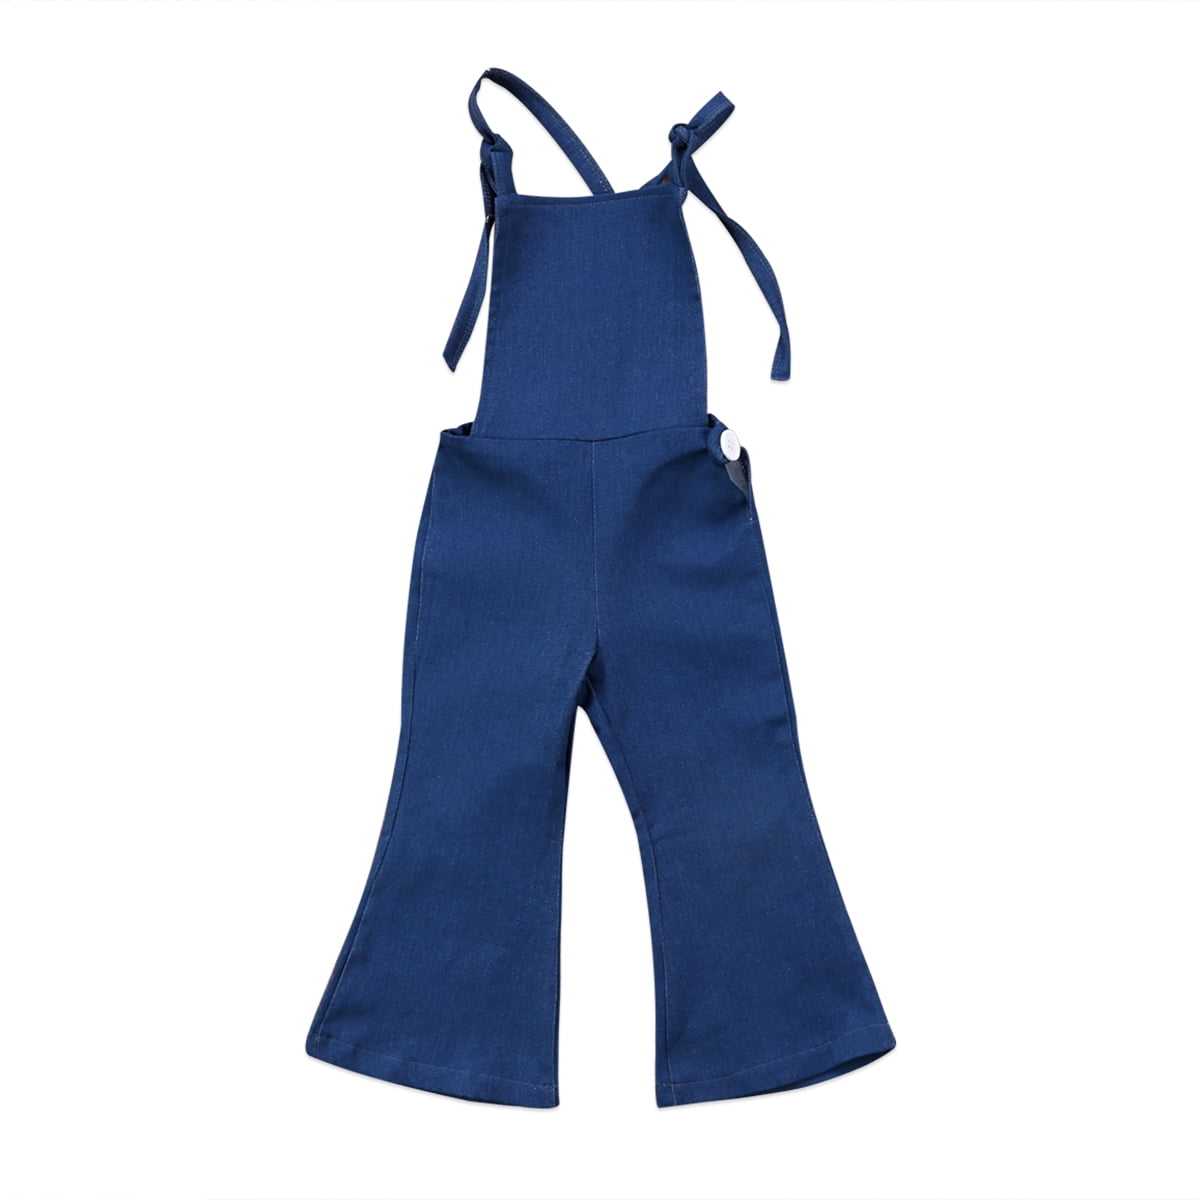 Douhoow Toddler Baby Girls Suspender Overall Jumpsuit Straps Romper Bell-Bottom Long Pants